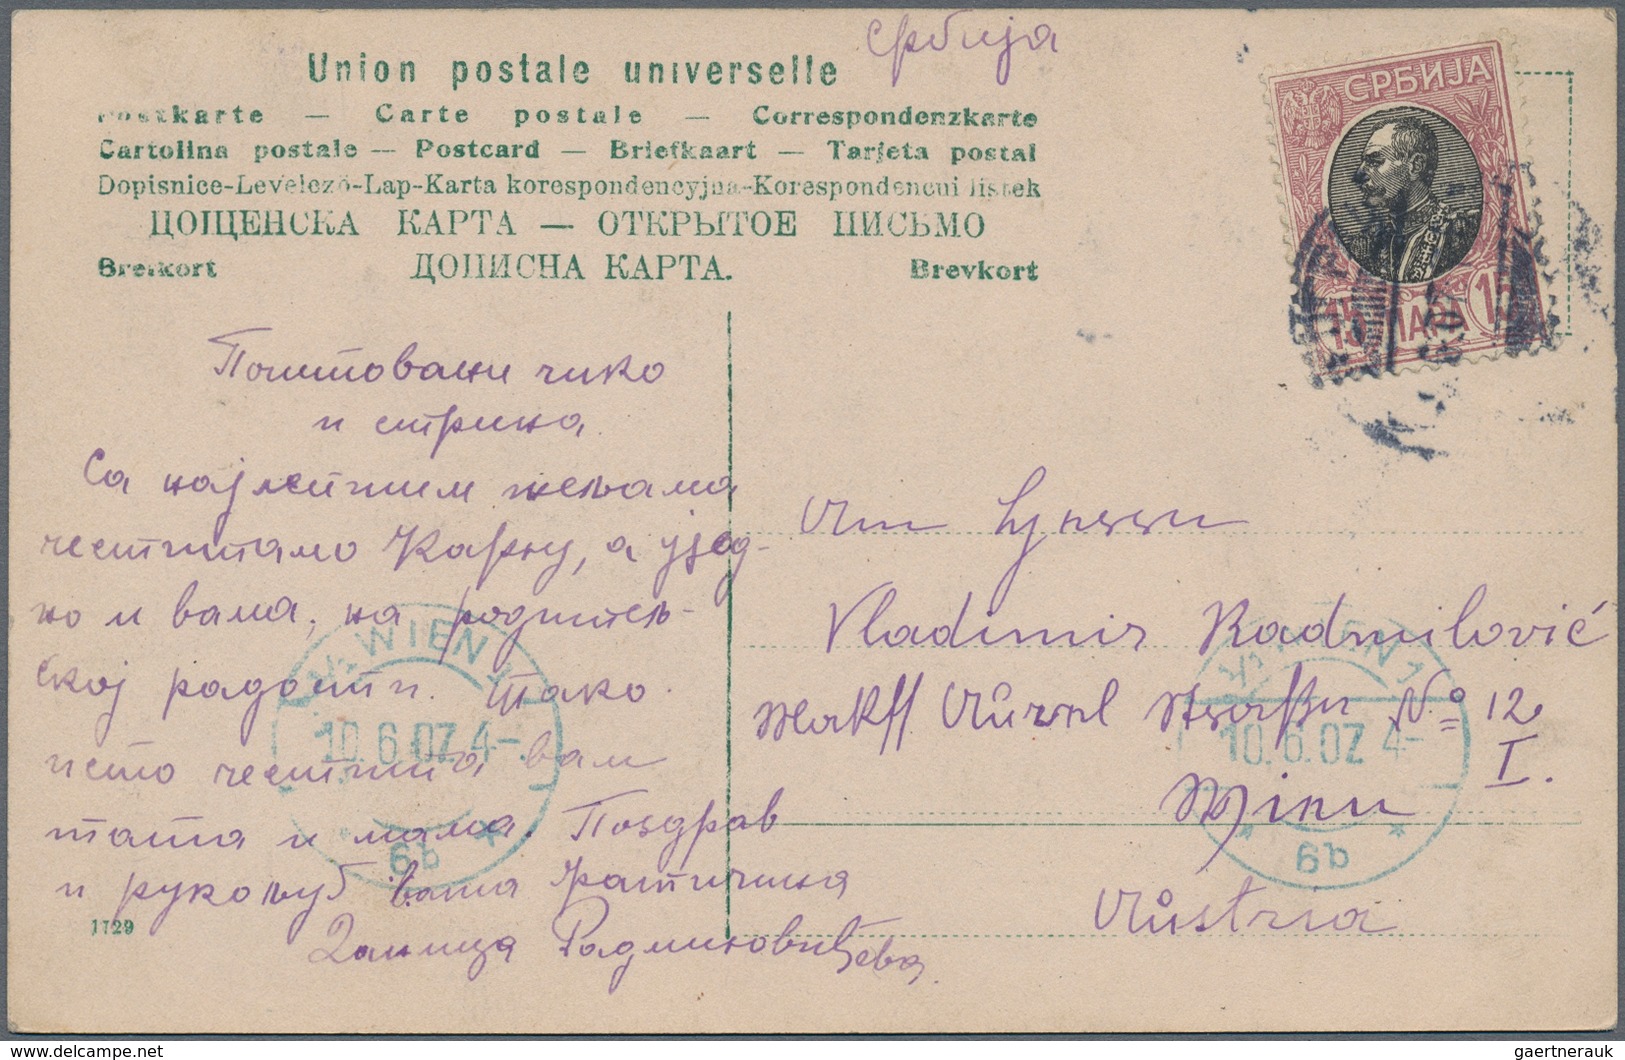 Jugoslawien: 1890/1943 (ca.), Yugoslavian area/Albania, lot of apprx. 94 covers/cards/stationeries,